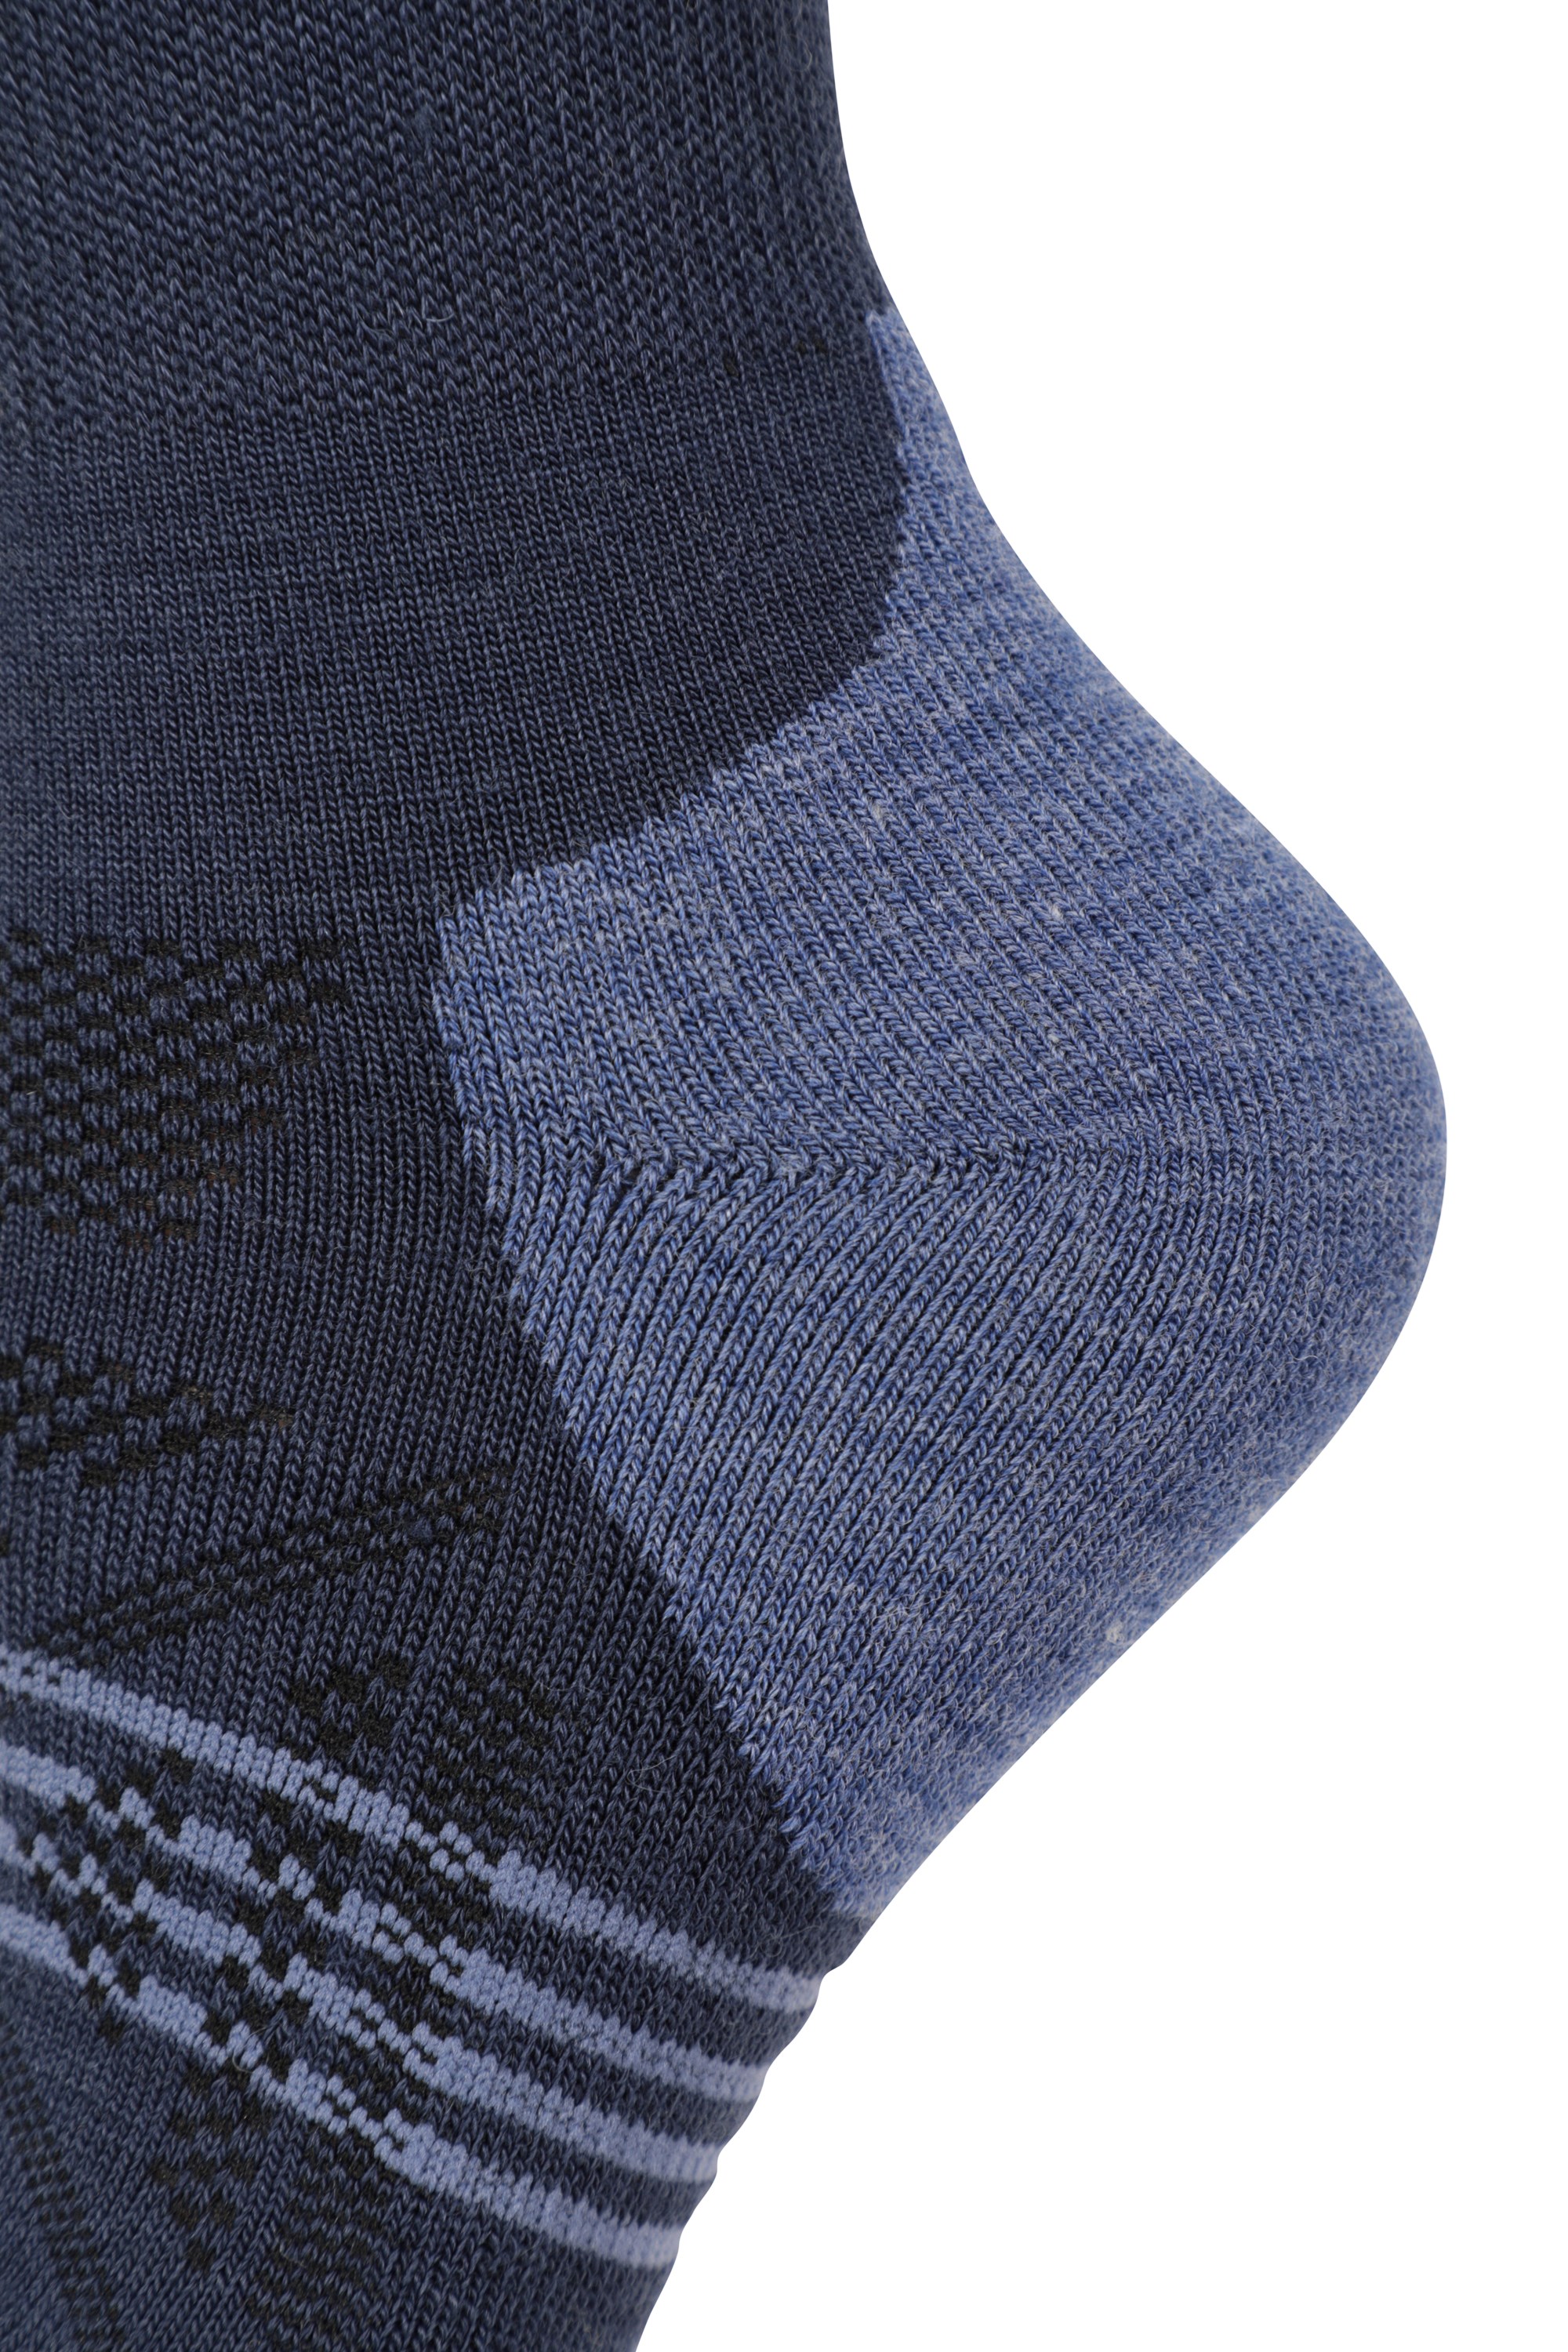 Extreme Trek calcetines de lana merino para mujer